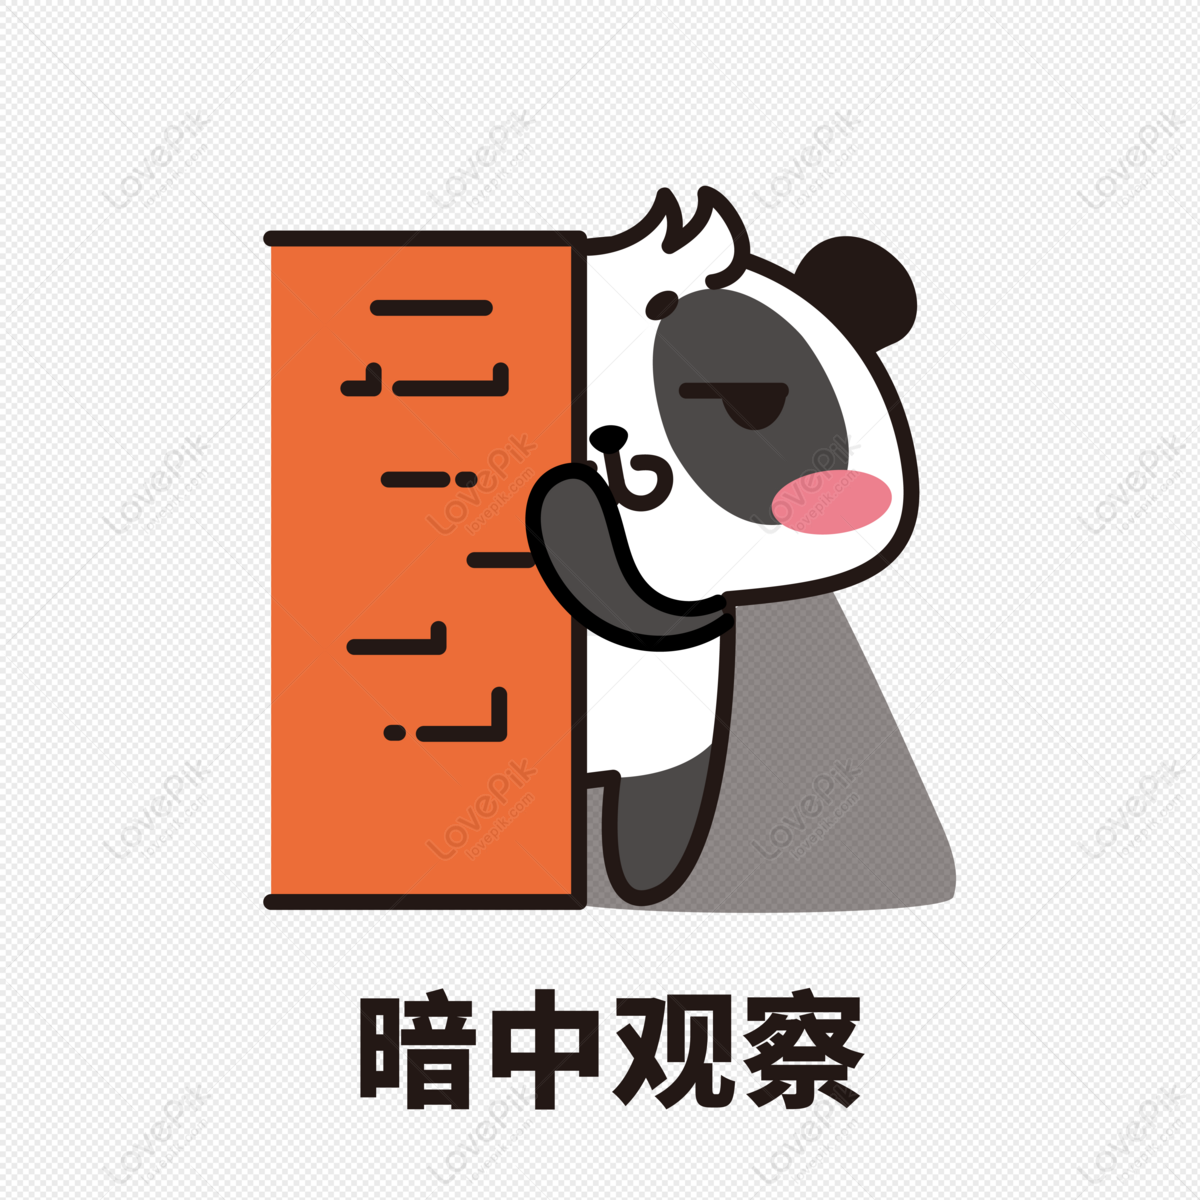 Fondo Una Imagen De Oso Panda Sentado En Bambú Fondo, Imagen De Panda De  Dibujos Animados, Panda, Dibujos Animados Imagen de Fondo Para Descarga  Gratuita - Pngtreee